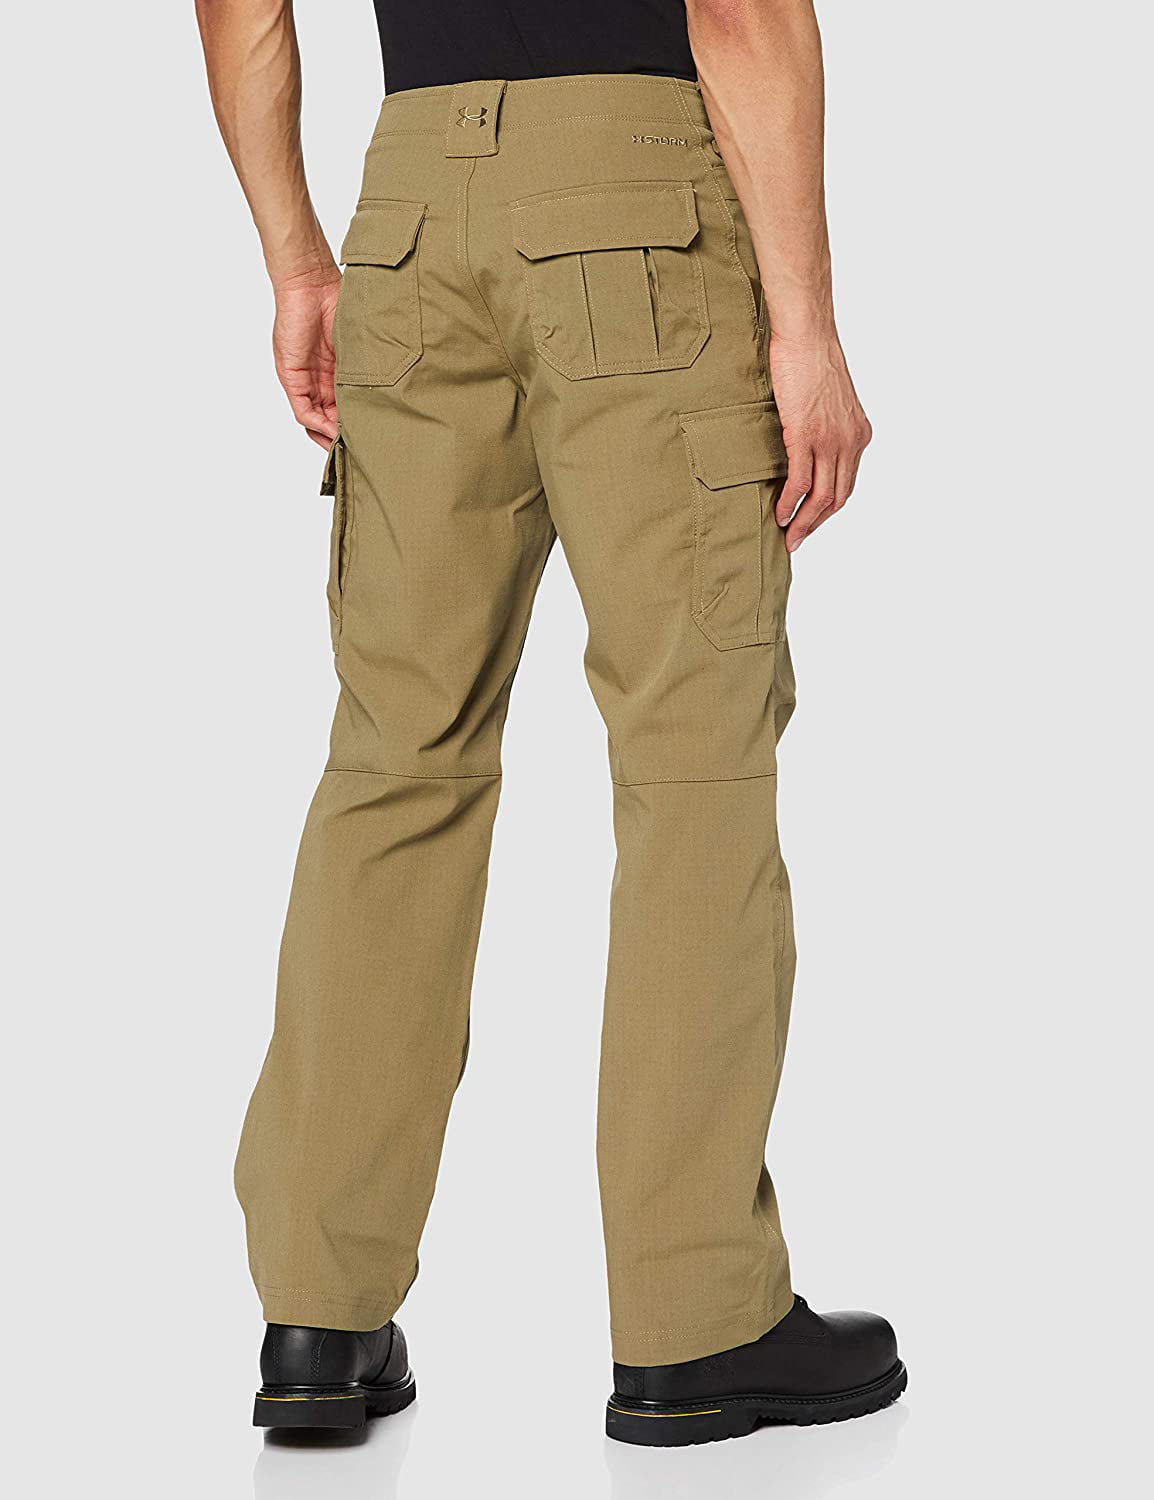 UNDER ARMOUR UA Tactical Patrol Pants - Bayou - Size 36 x 32 